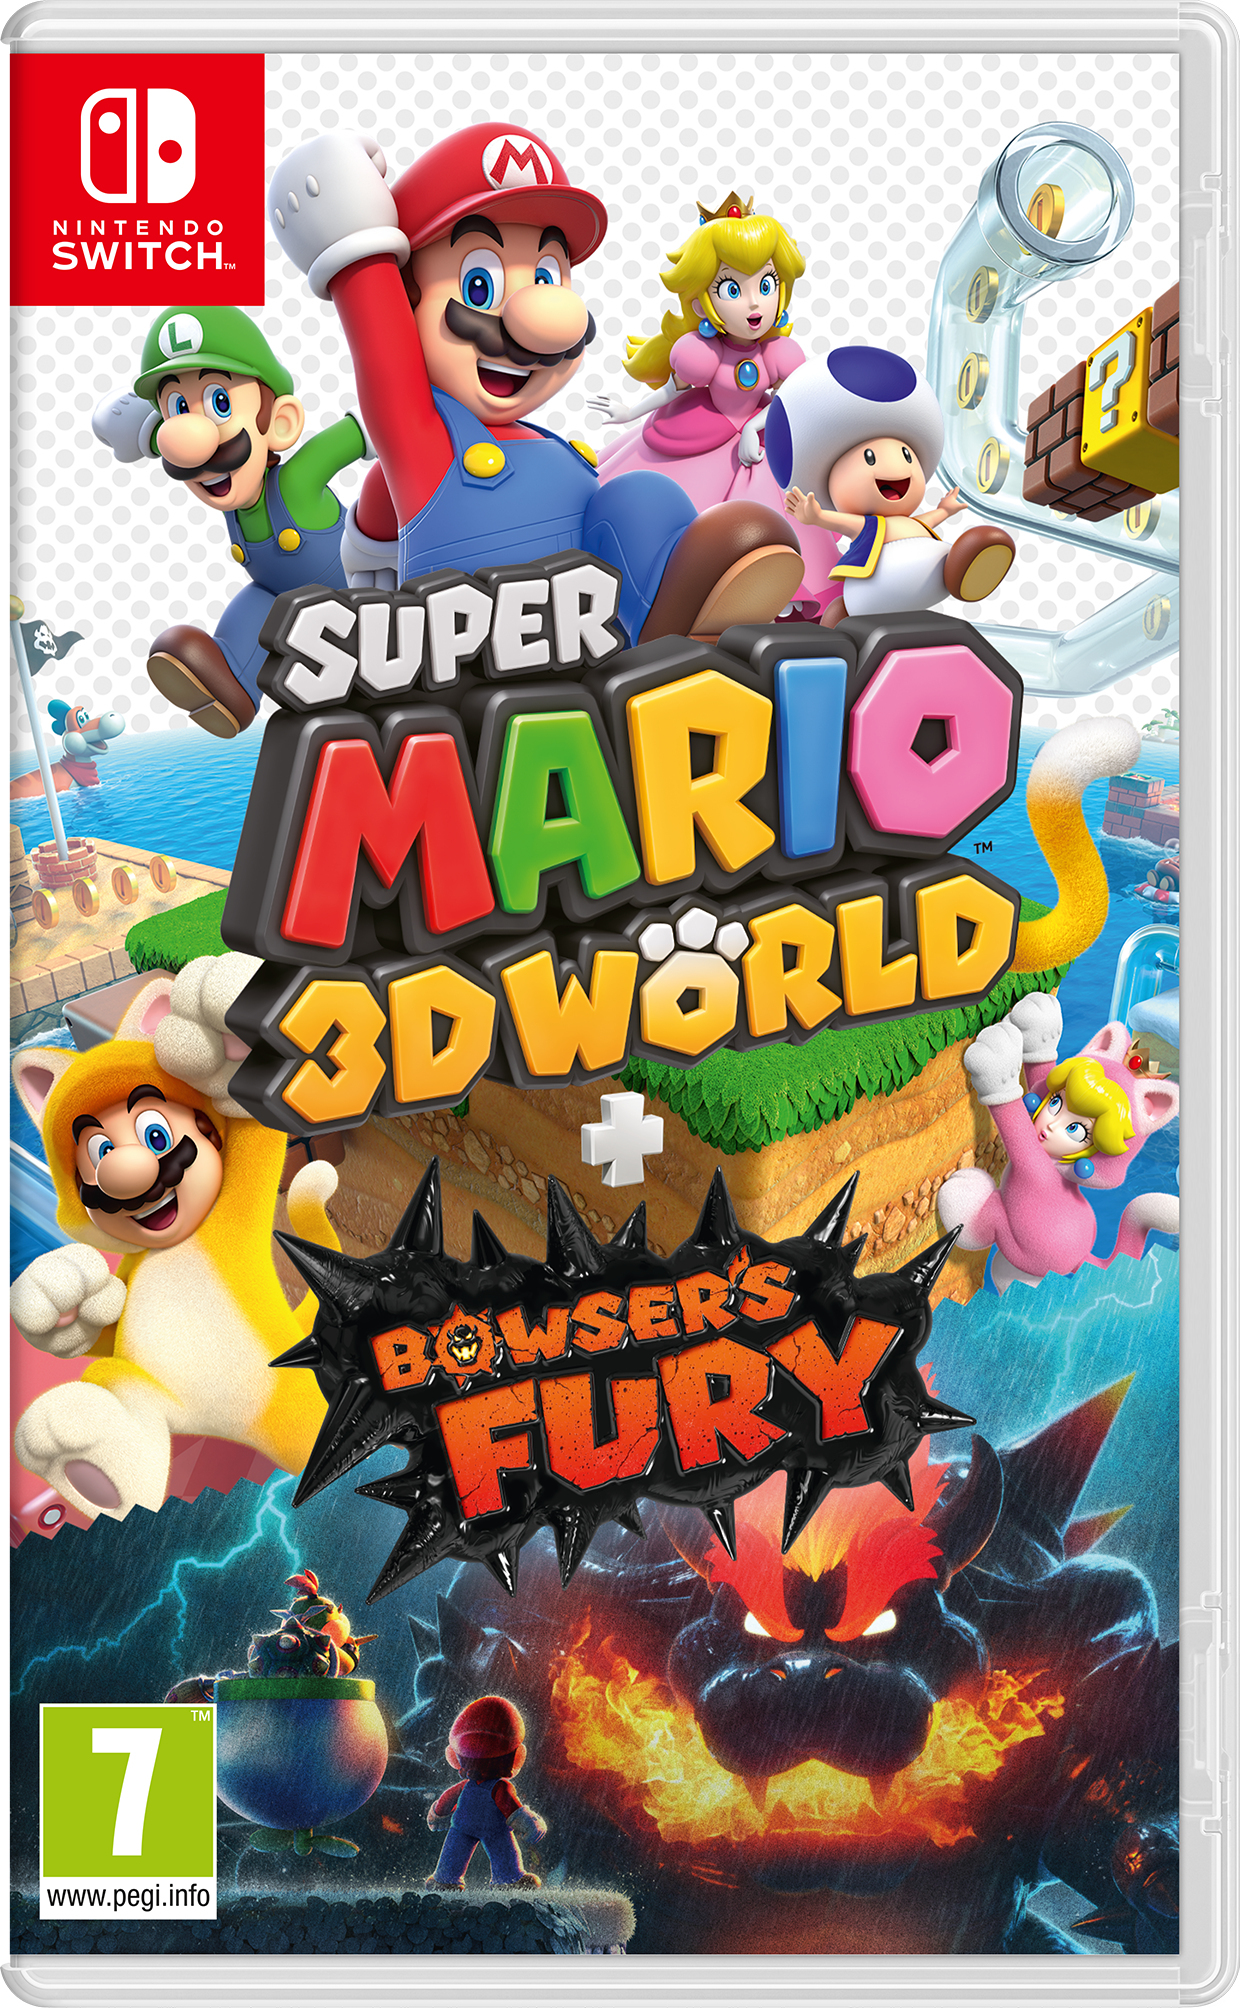 Nintendo Super Mario 3D World + Bowser’s Fury